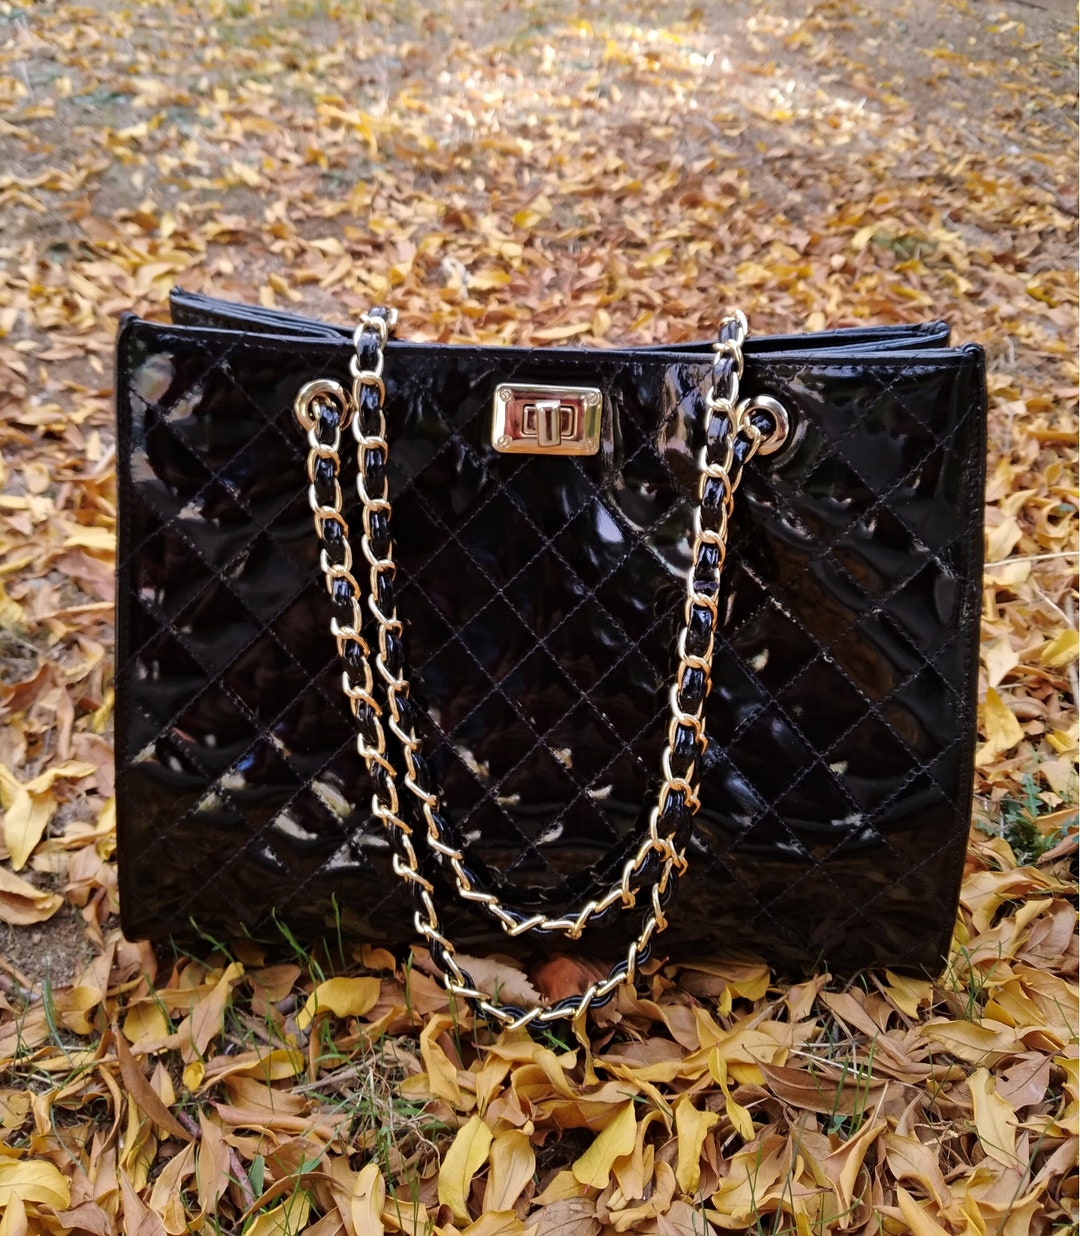 Classic Style Genuine Leather Twist Lock Bag Quilted Elegant -  Israel